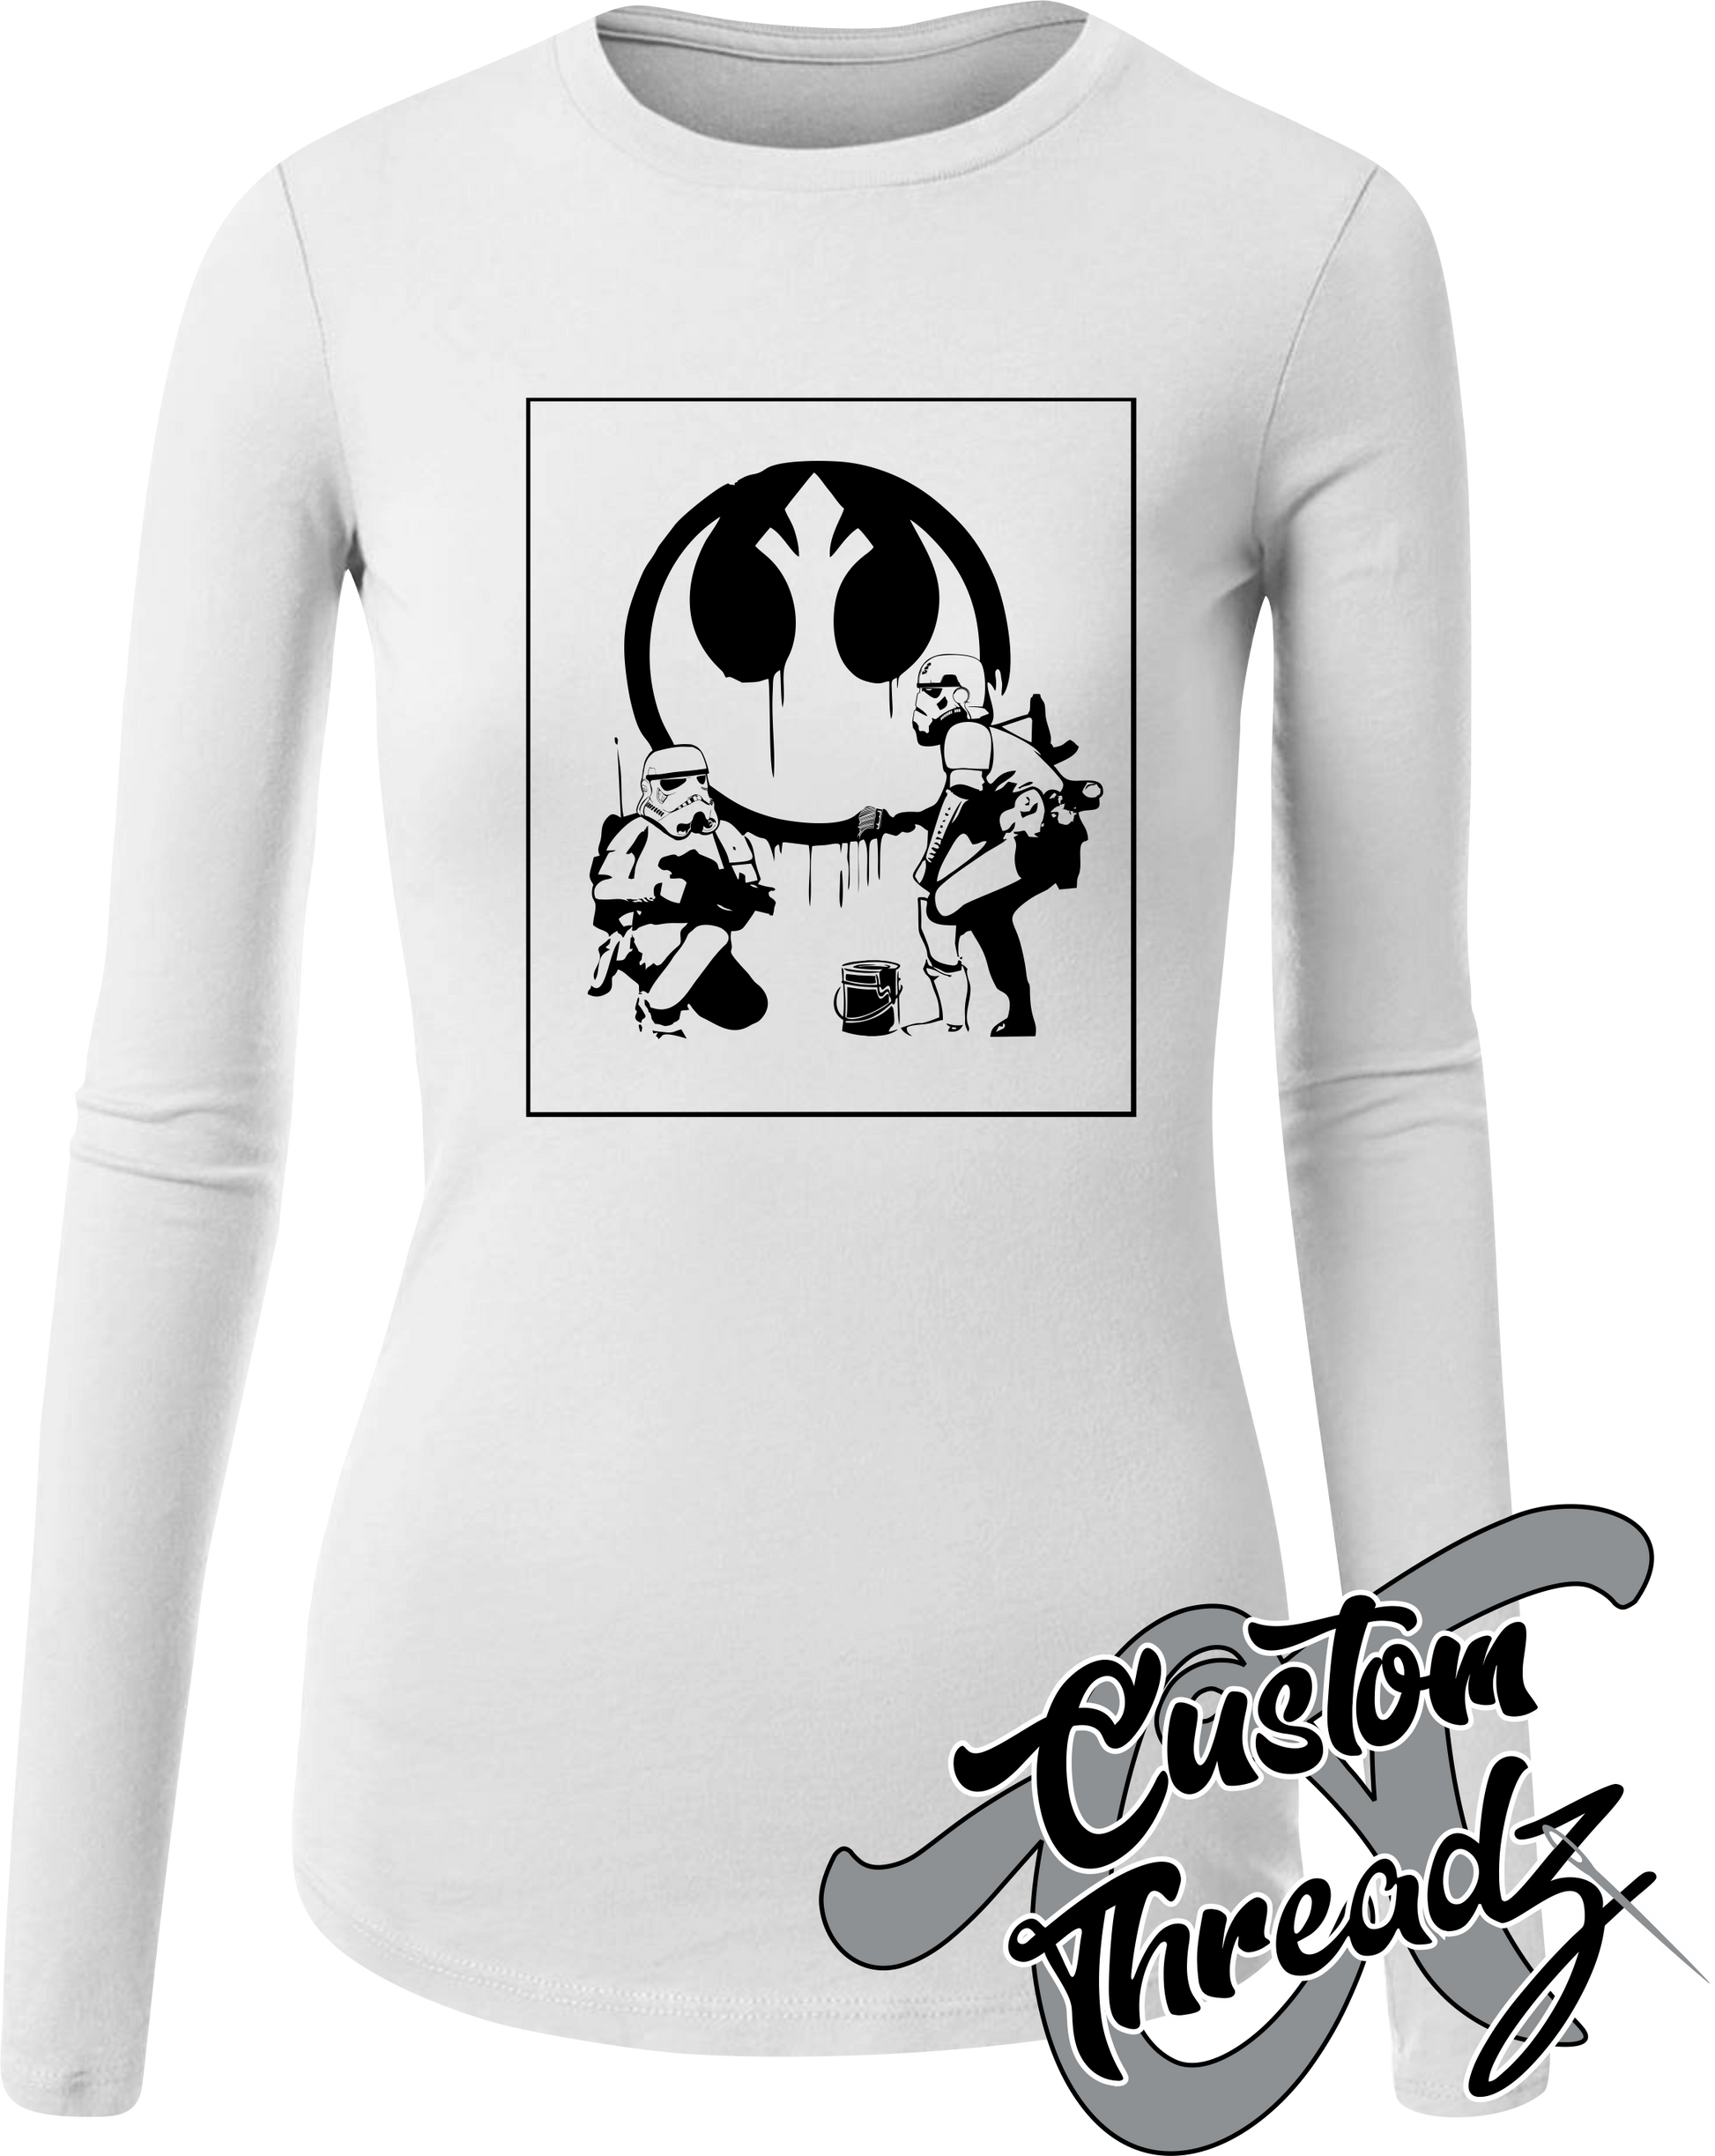 white womens long sleeve tee with stormtrooper rebel alliance start wars DTG printed design